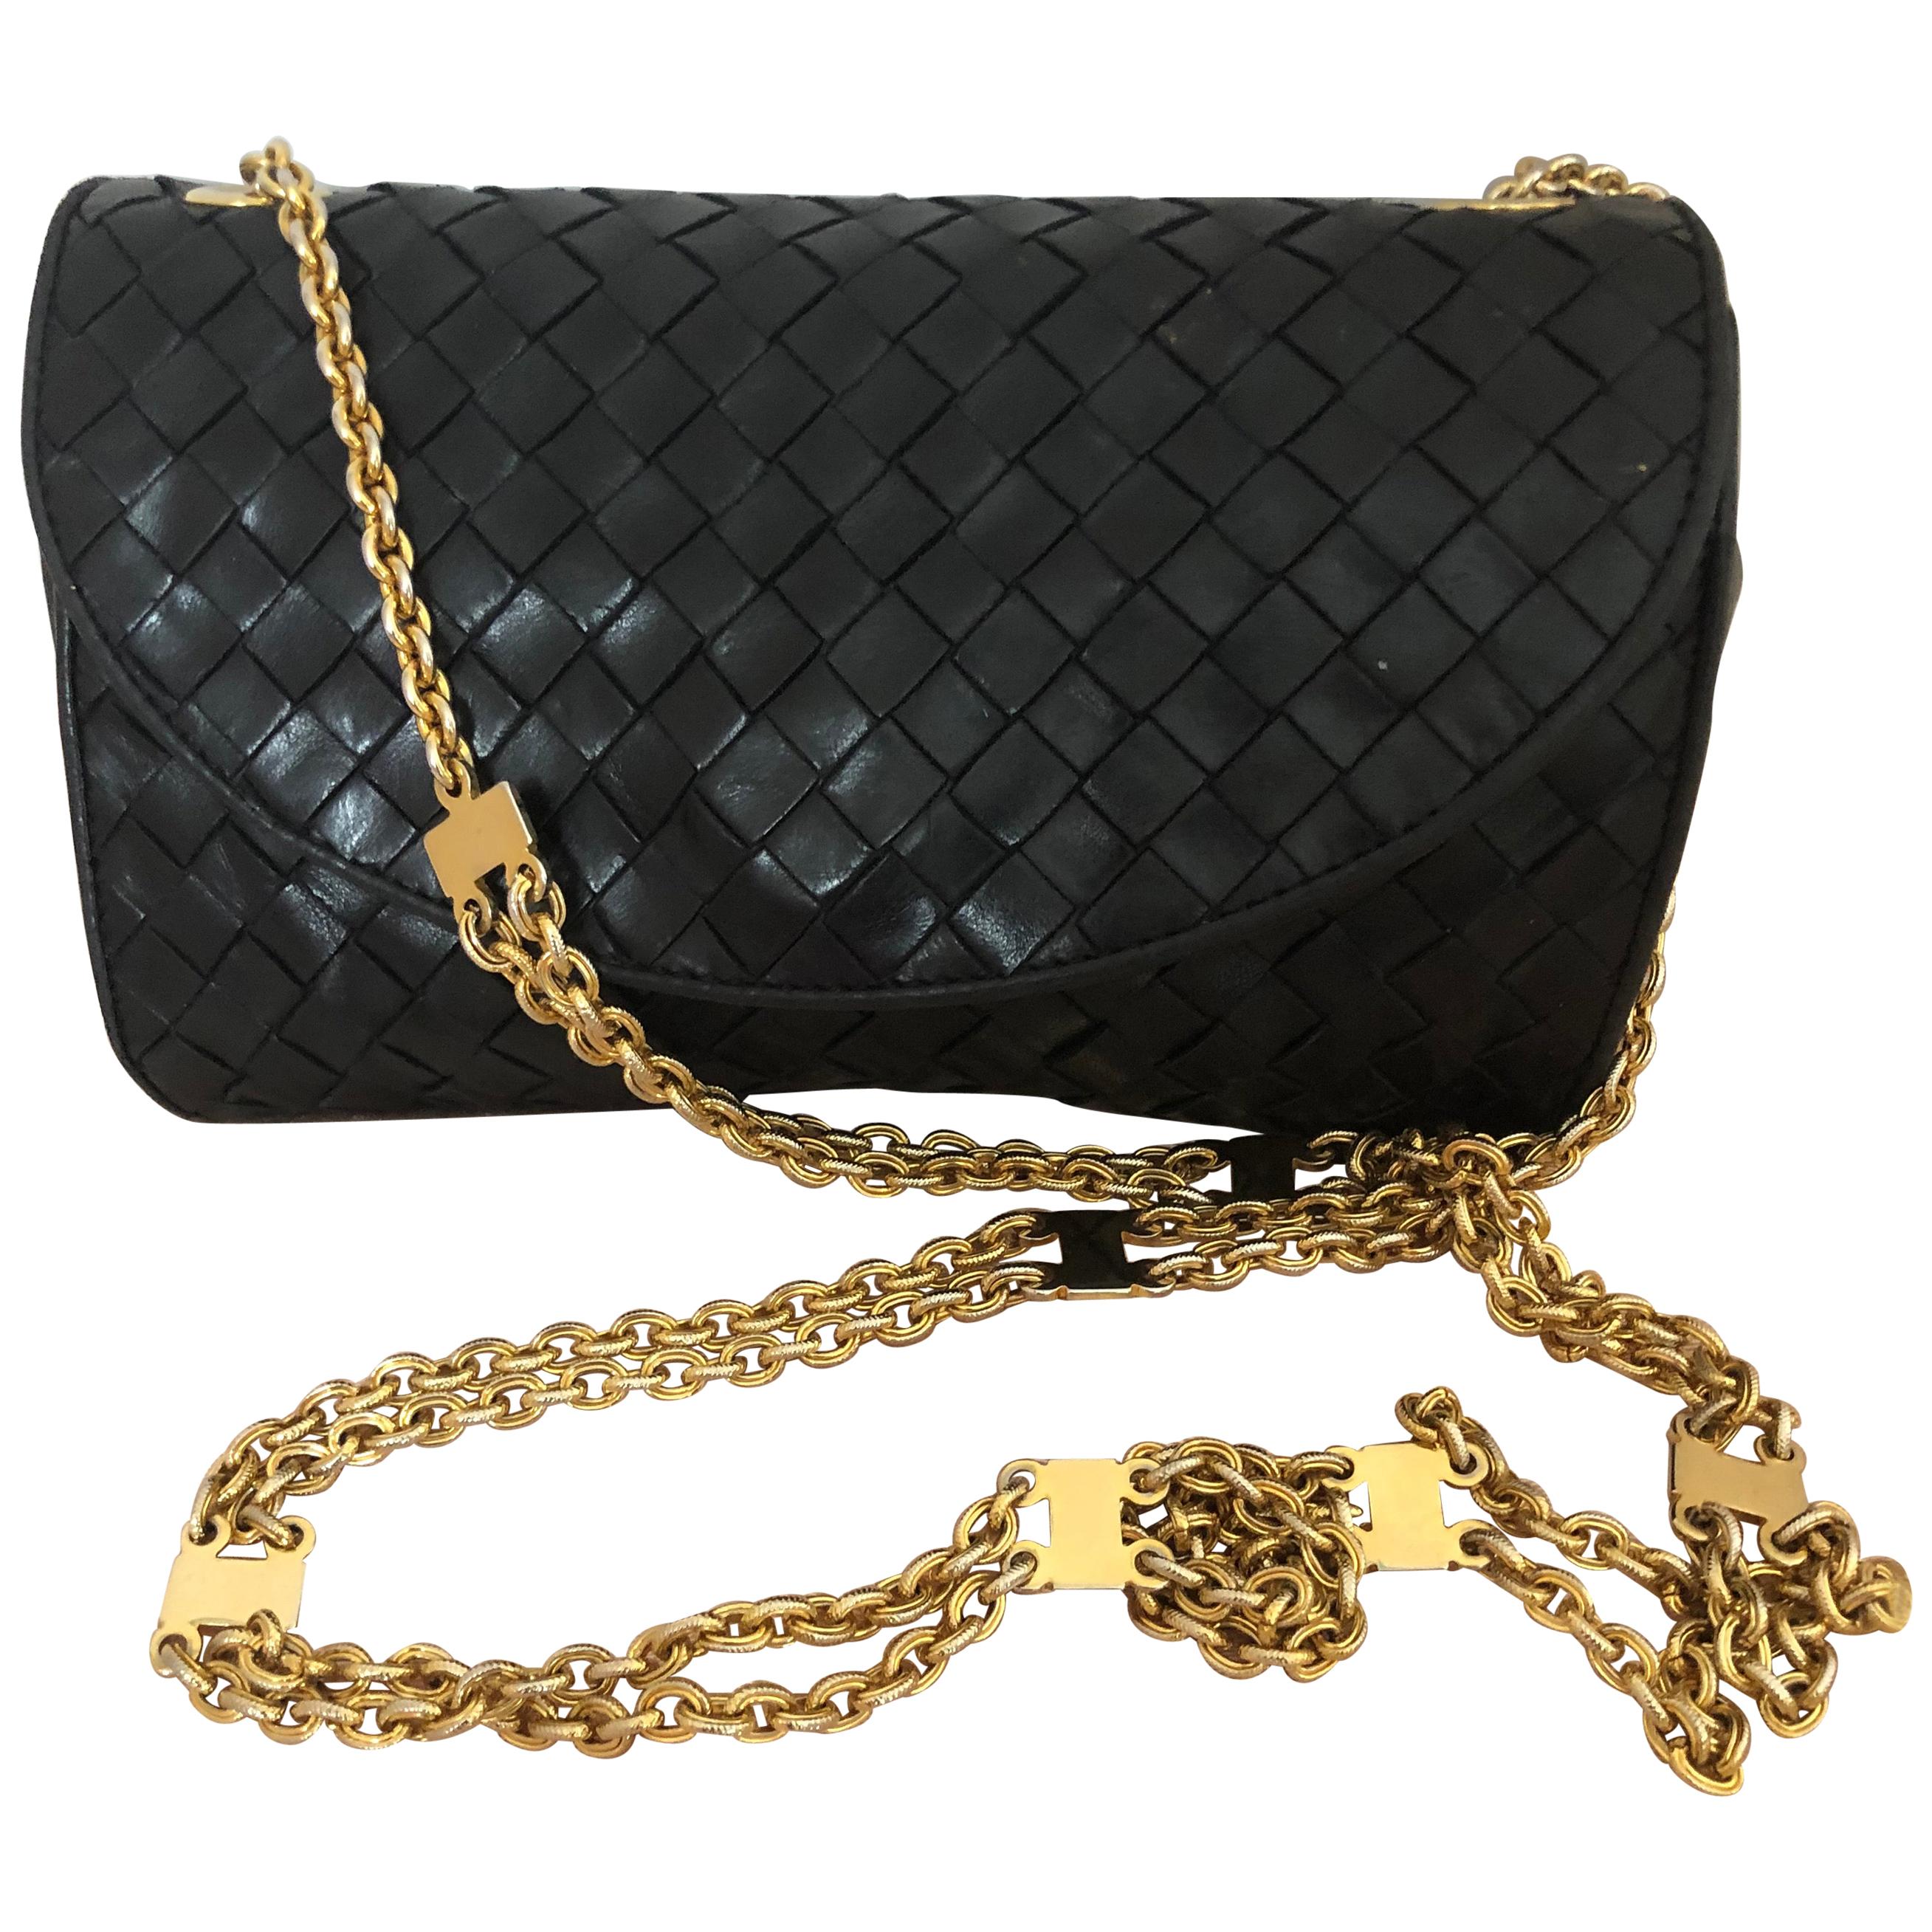 Vintage Bottega Veneta Black Intrecciato Handbag with Chain Strap